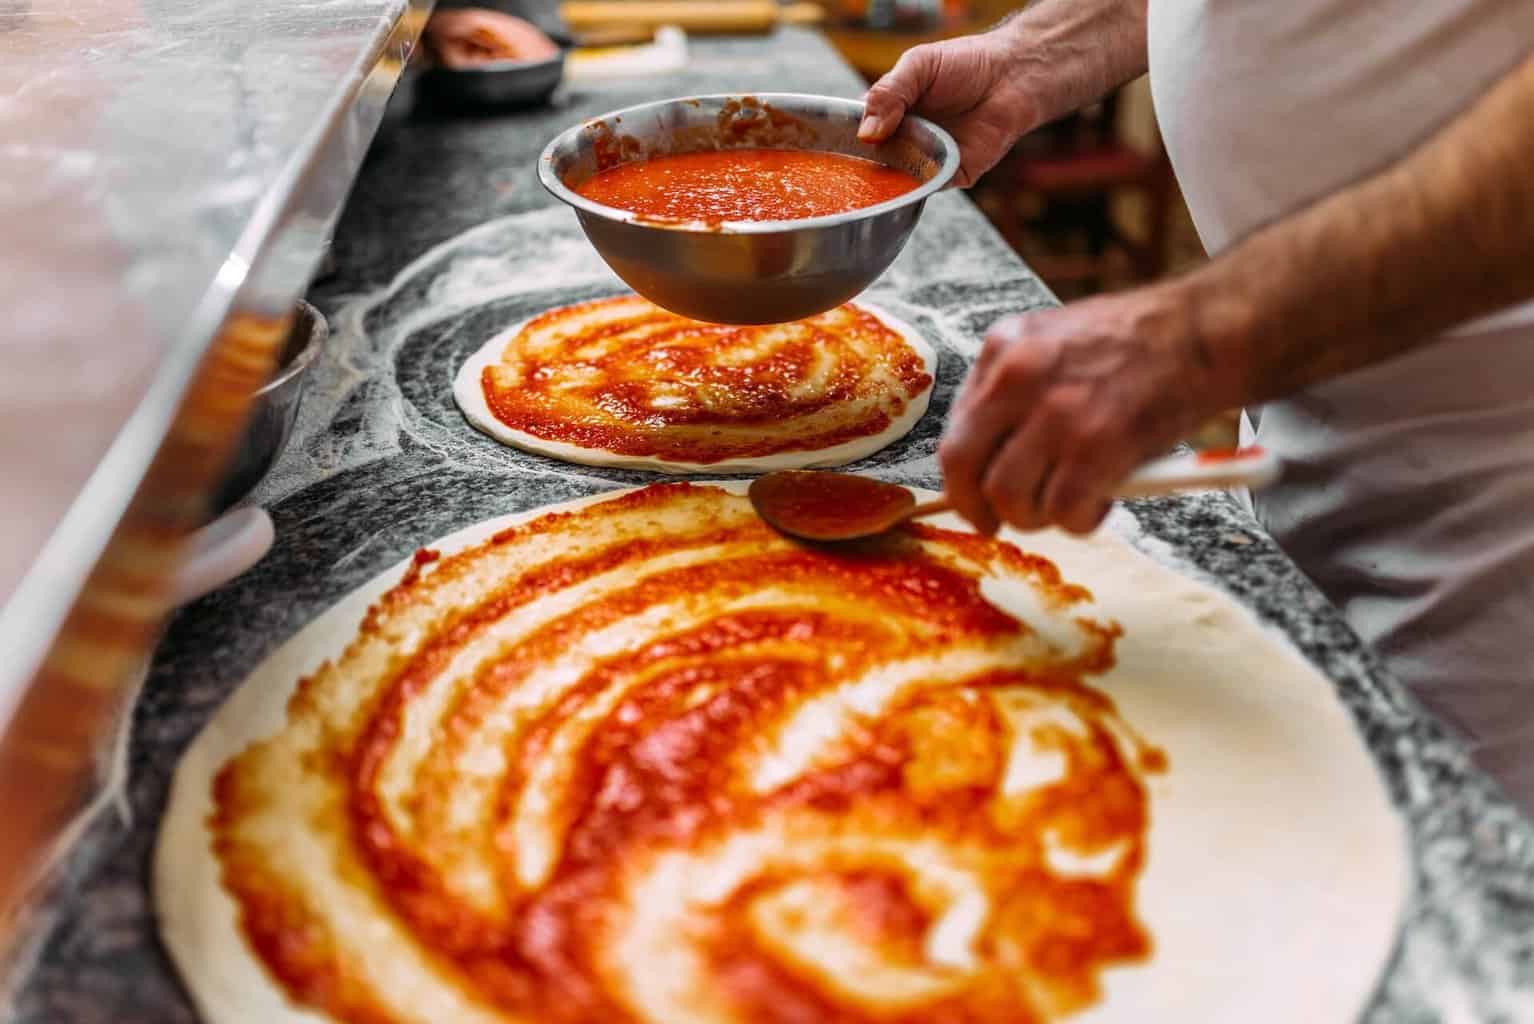 A pizza chef putting tomato sauce on pizza dough